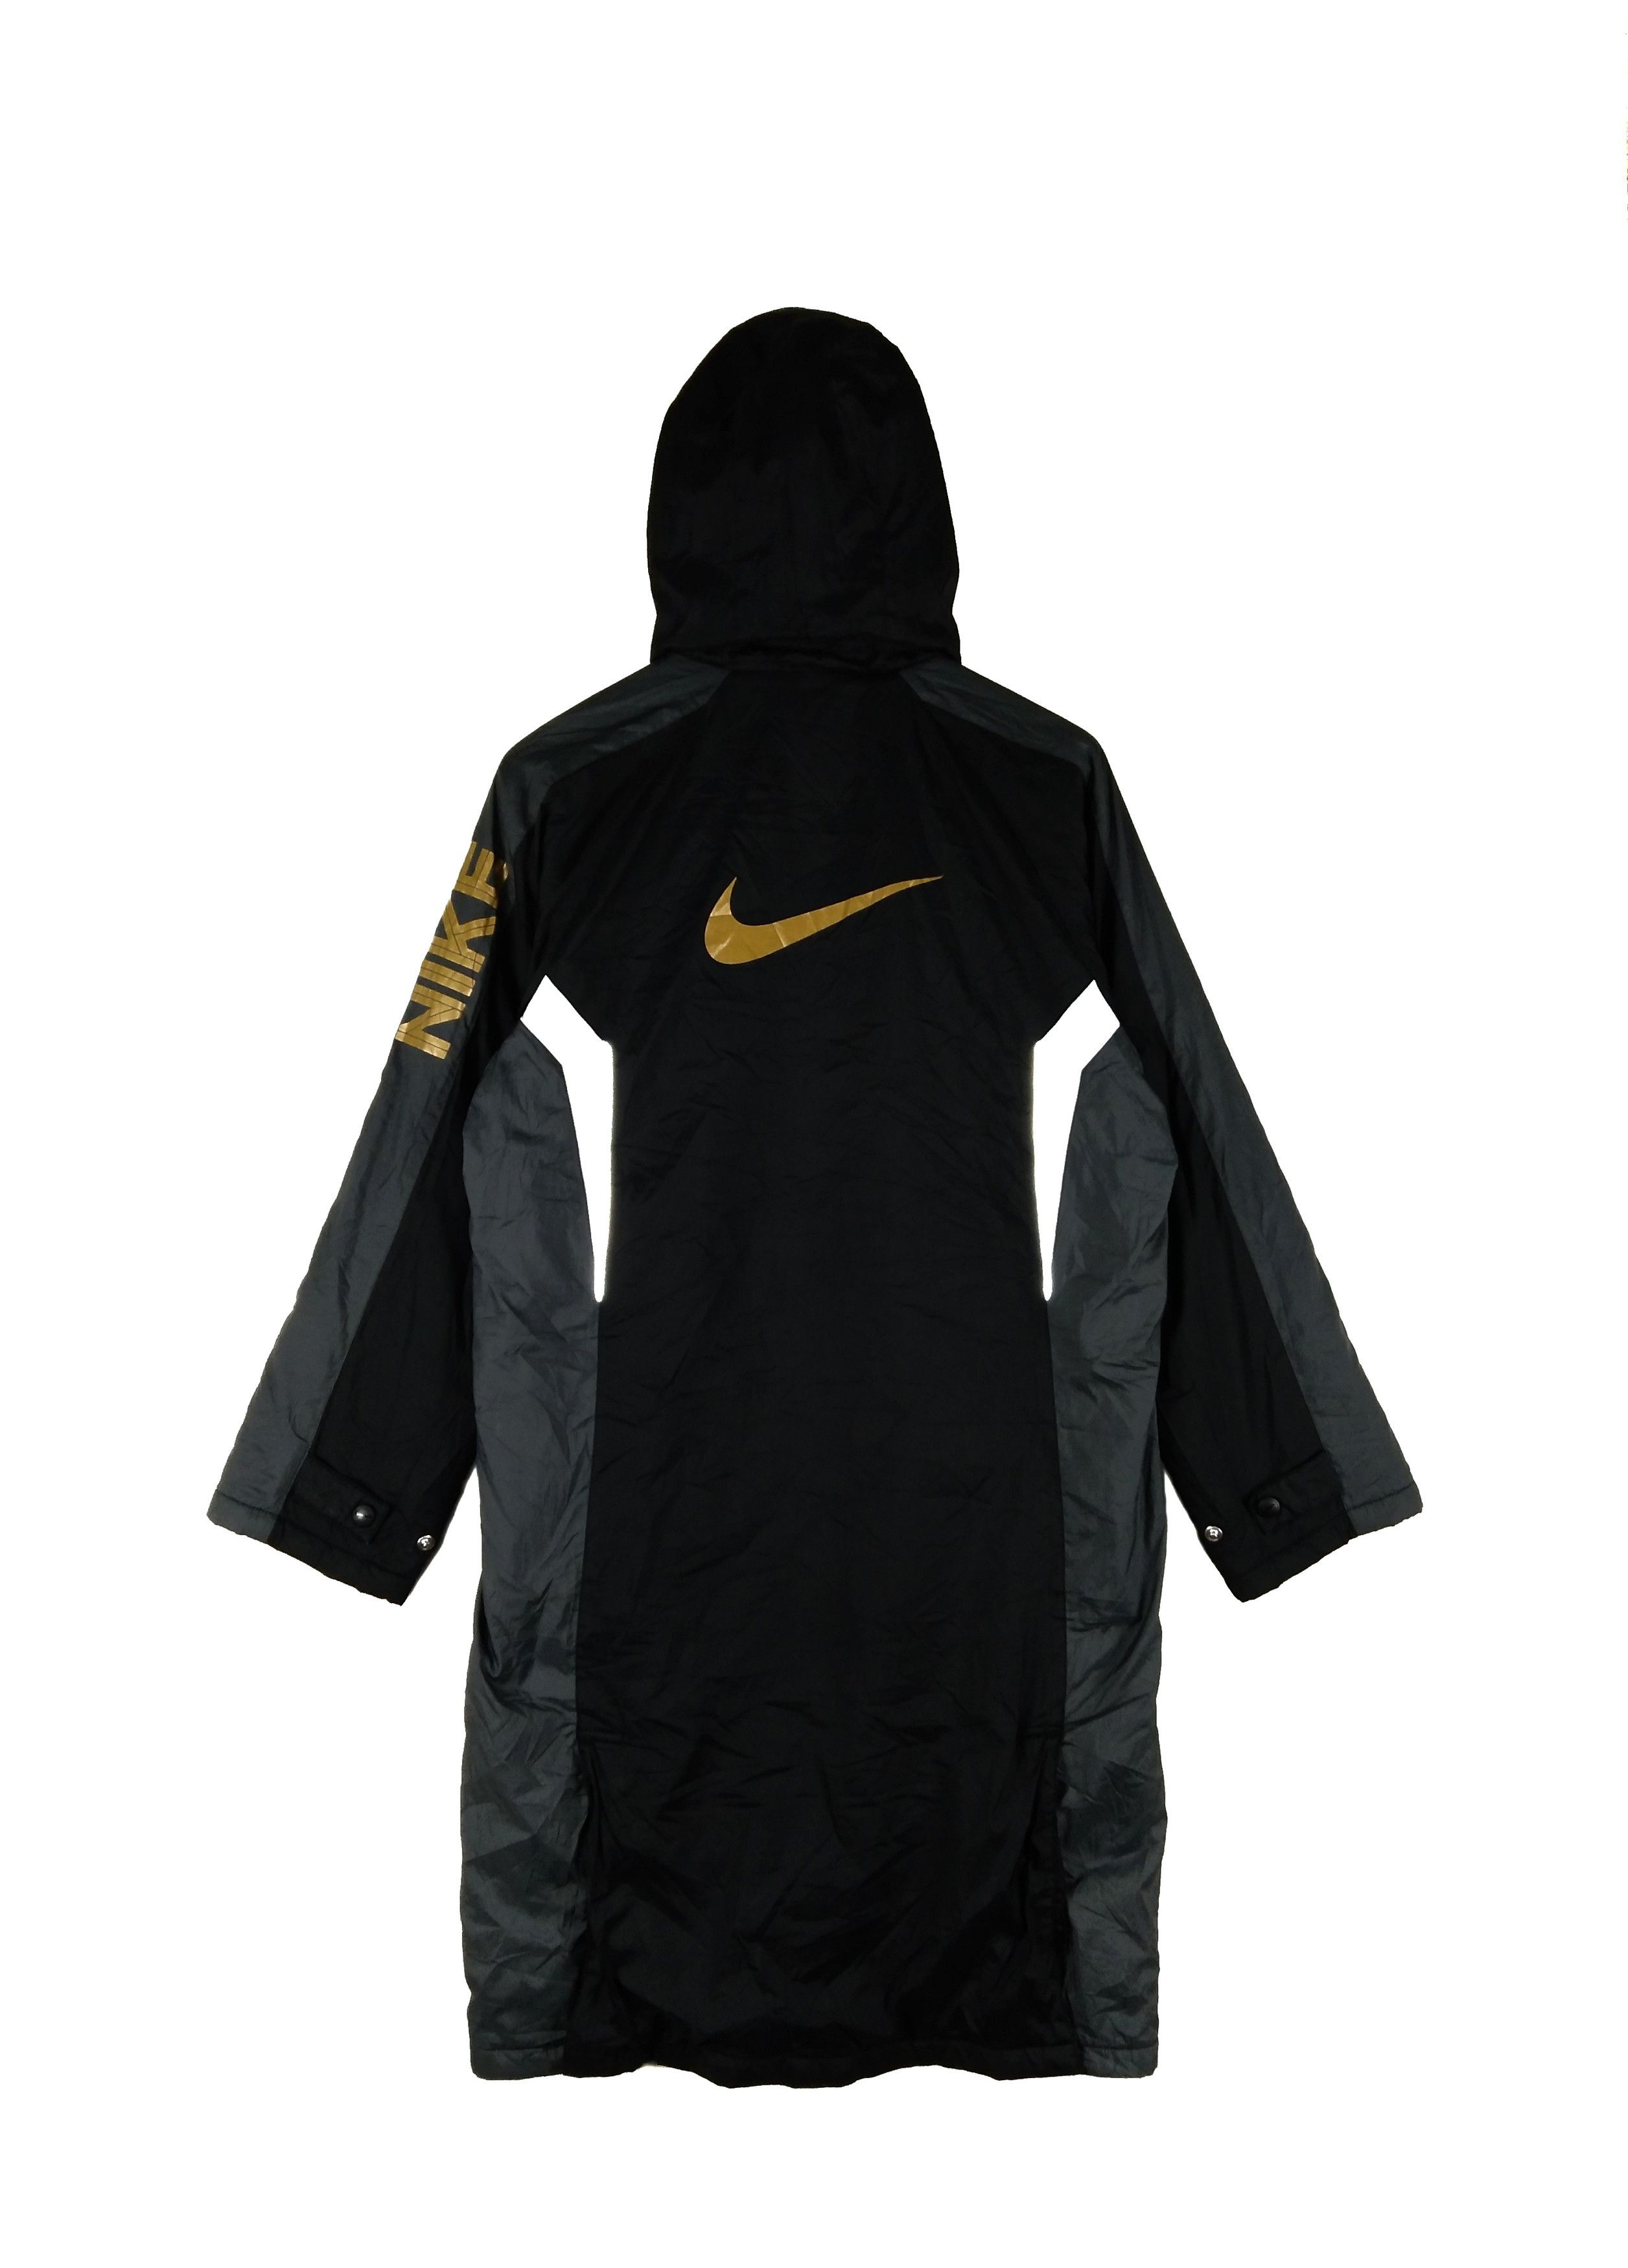 Nike 💥RARE💥VINTAGE NIKE HOODIE LONG JACKET Size US M / EU 48-50 / 2 - 4 Thumbnail